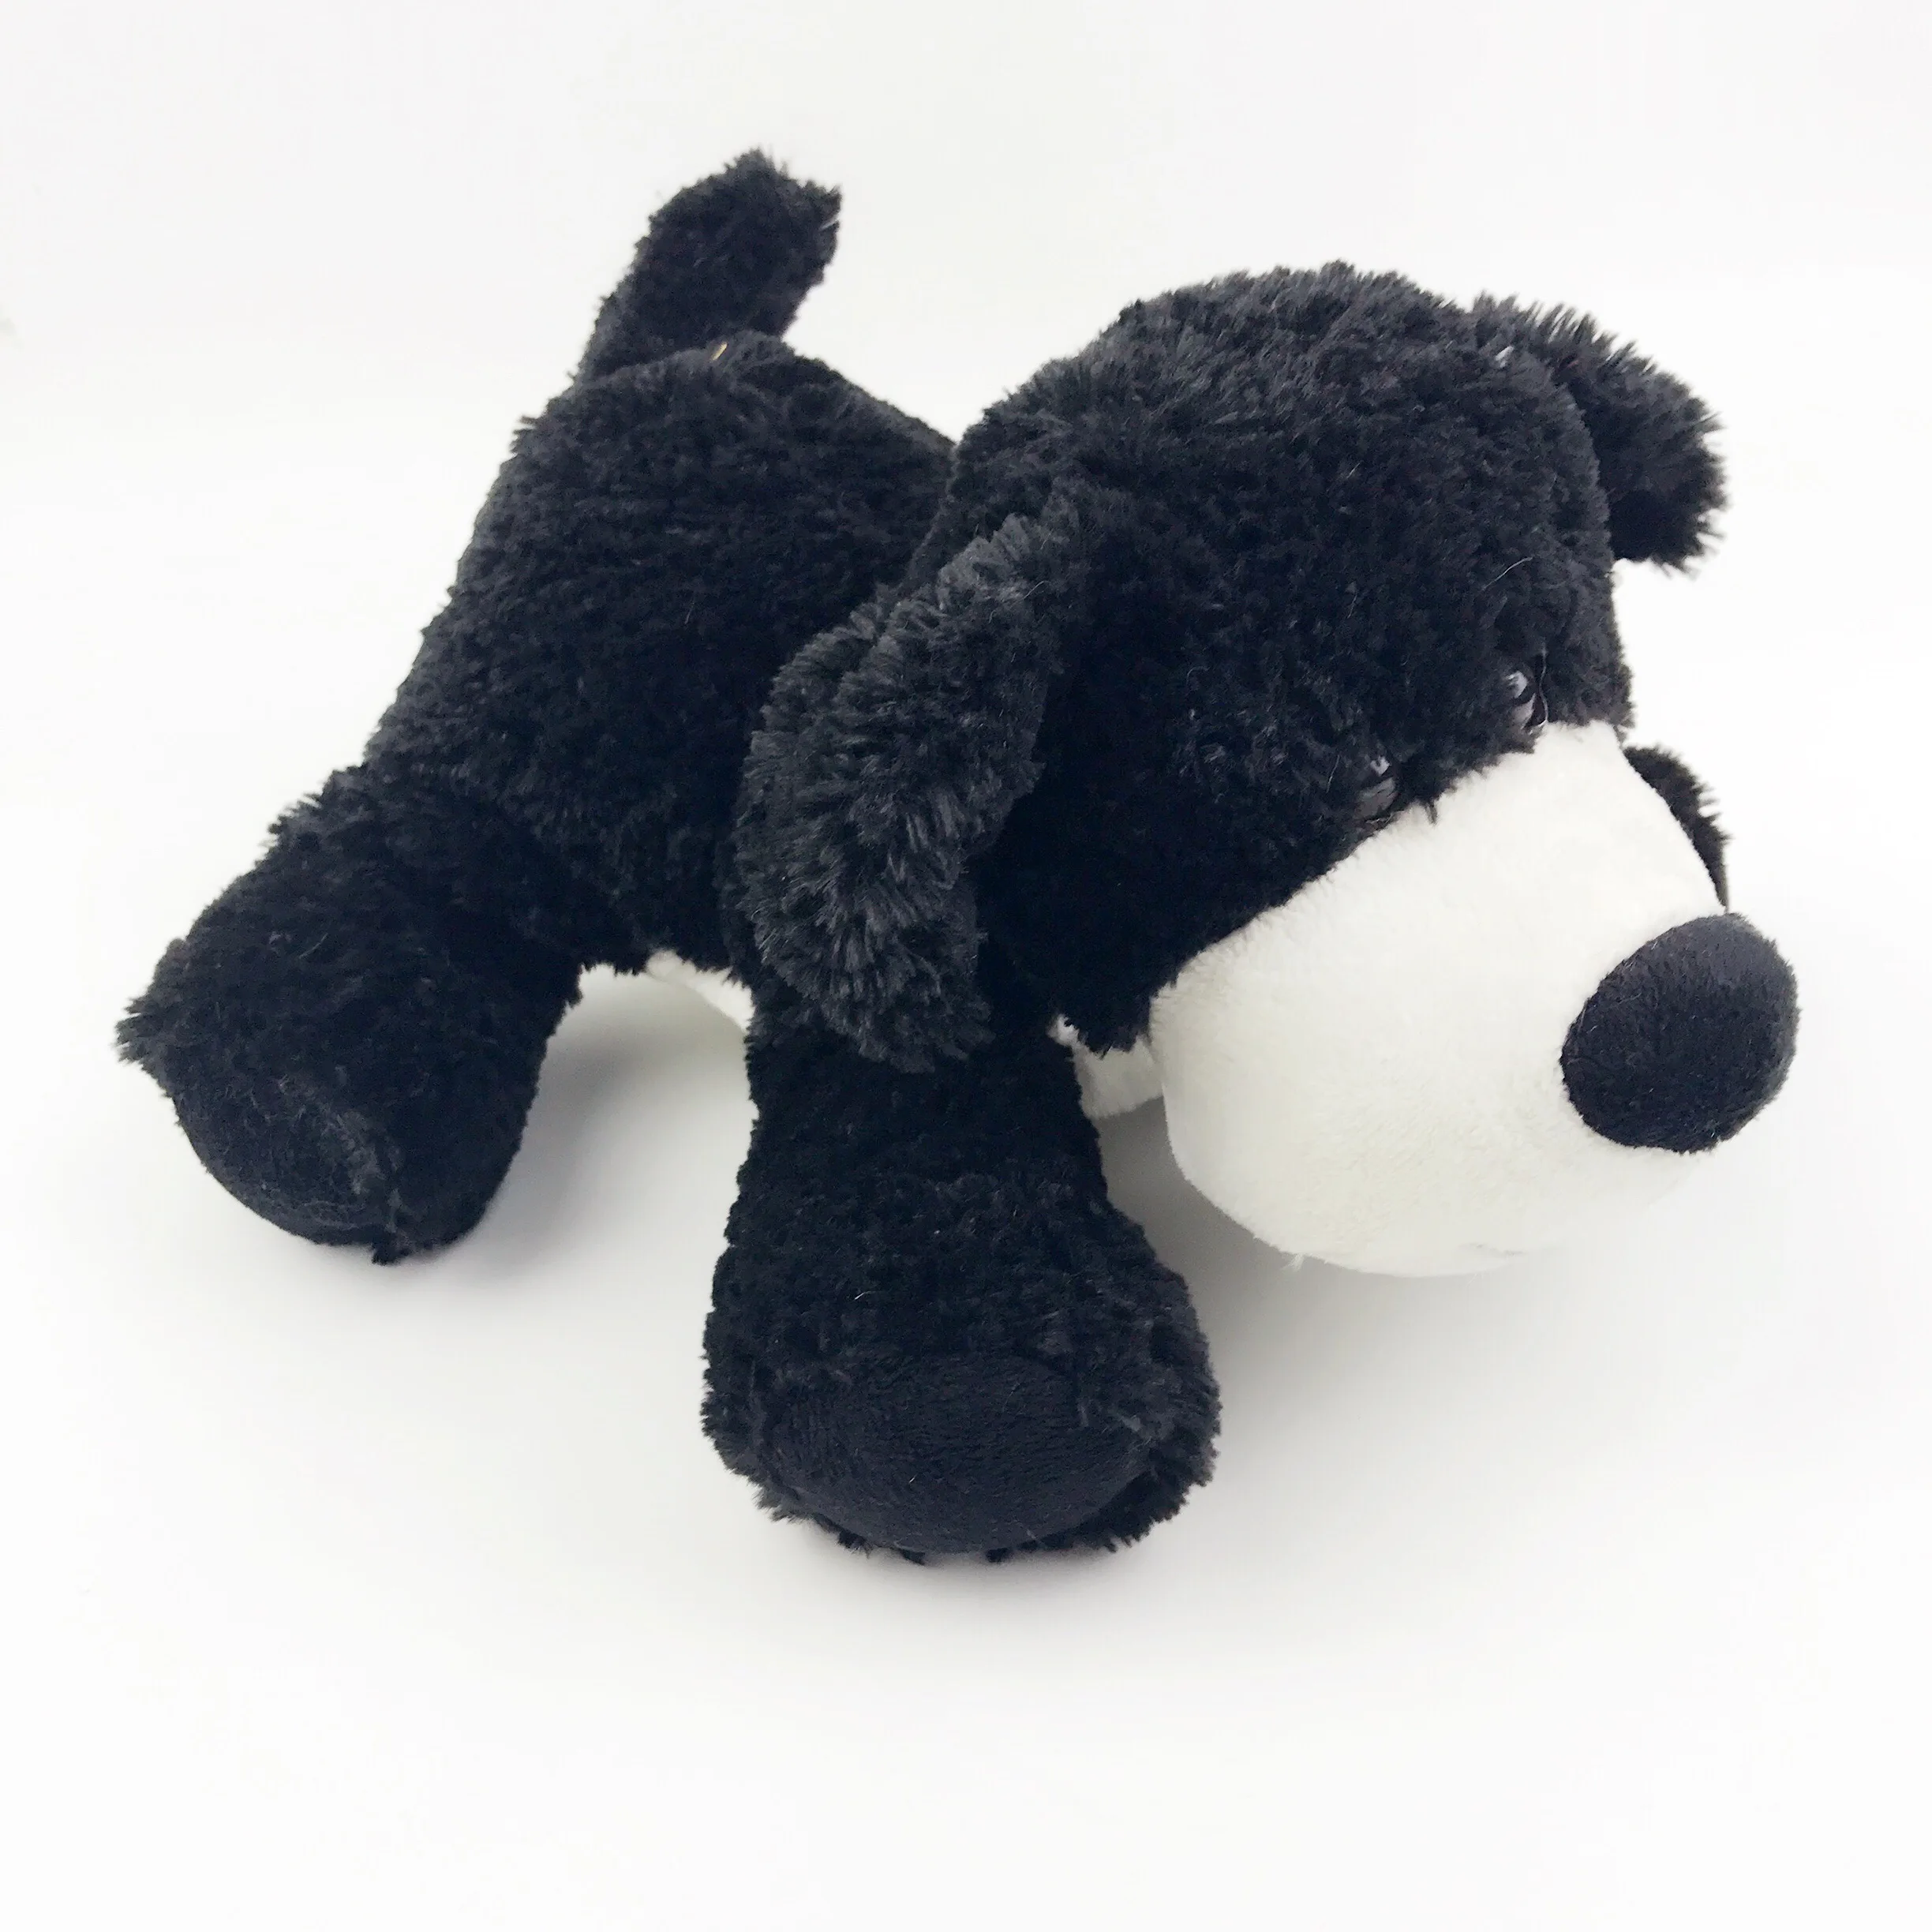 Cute Soft Black Dog Stuffed Animal Animated Puppy Plush Toy Black White ...